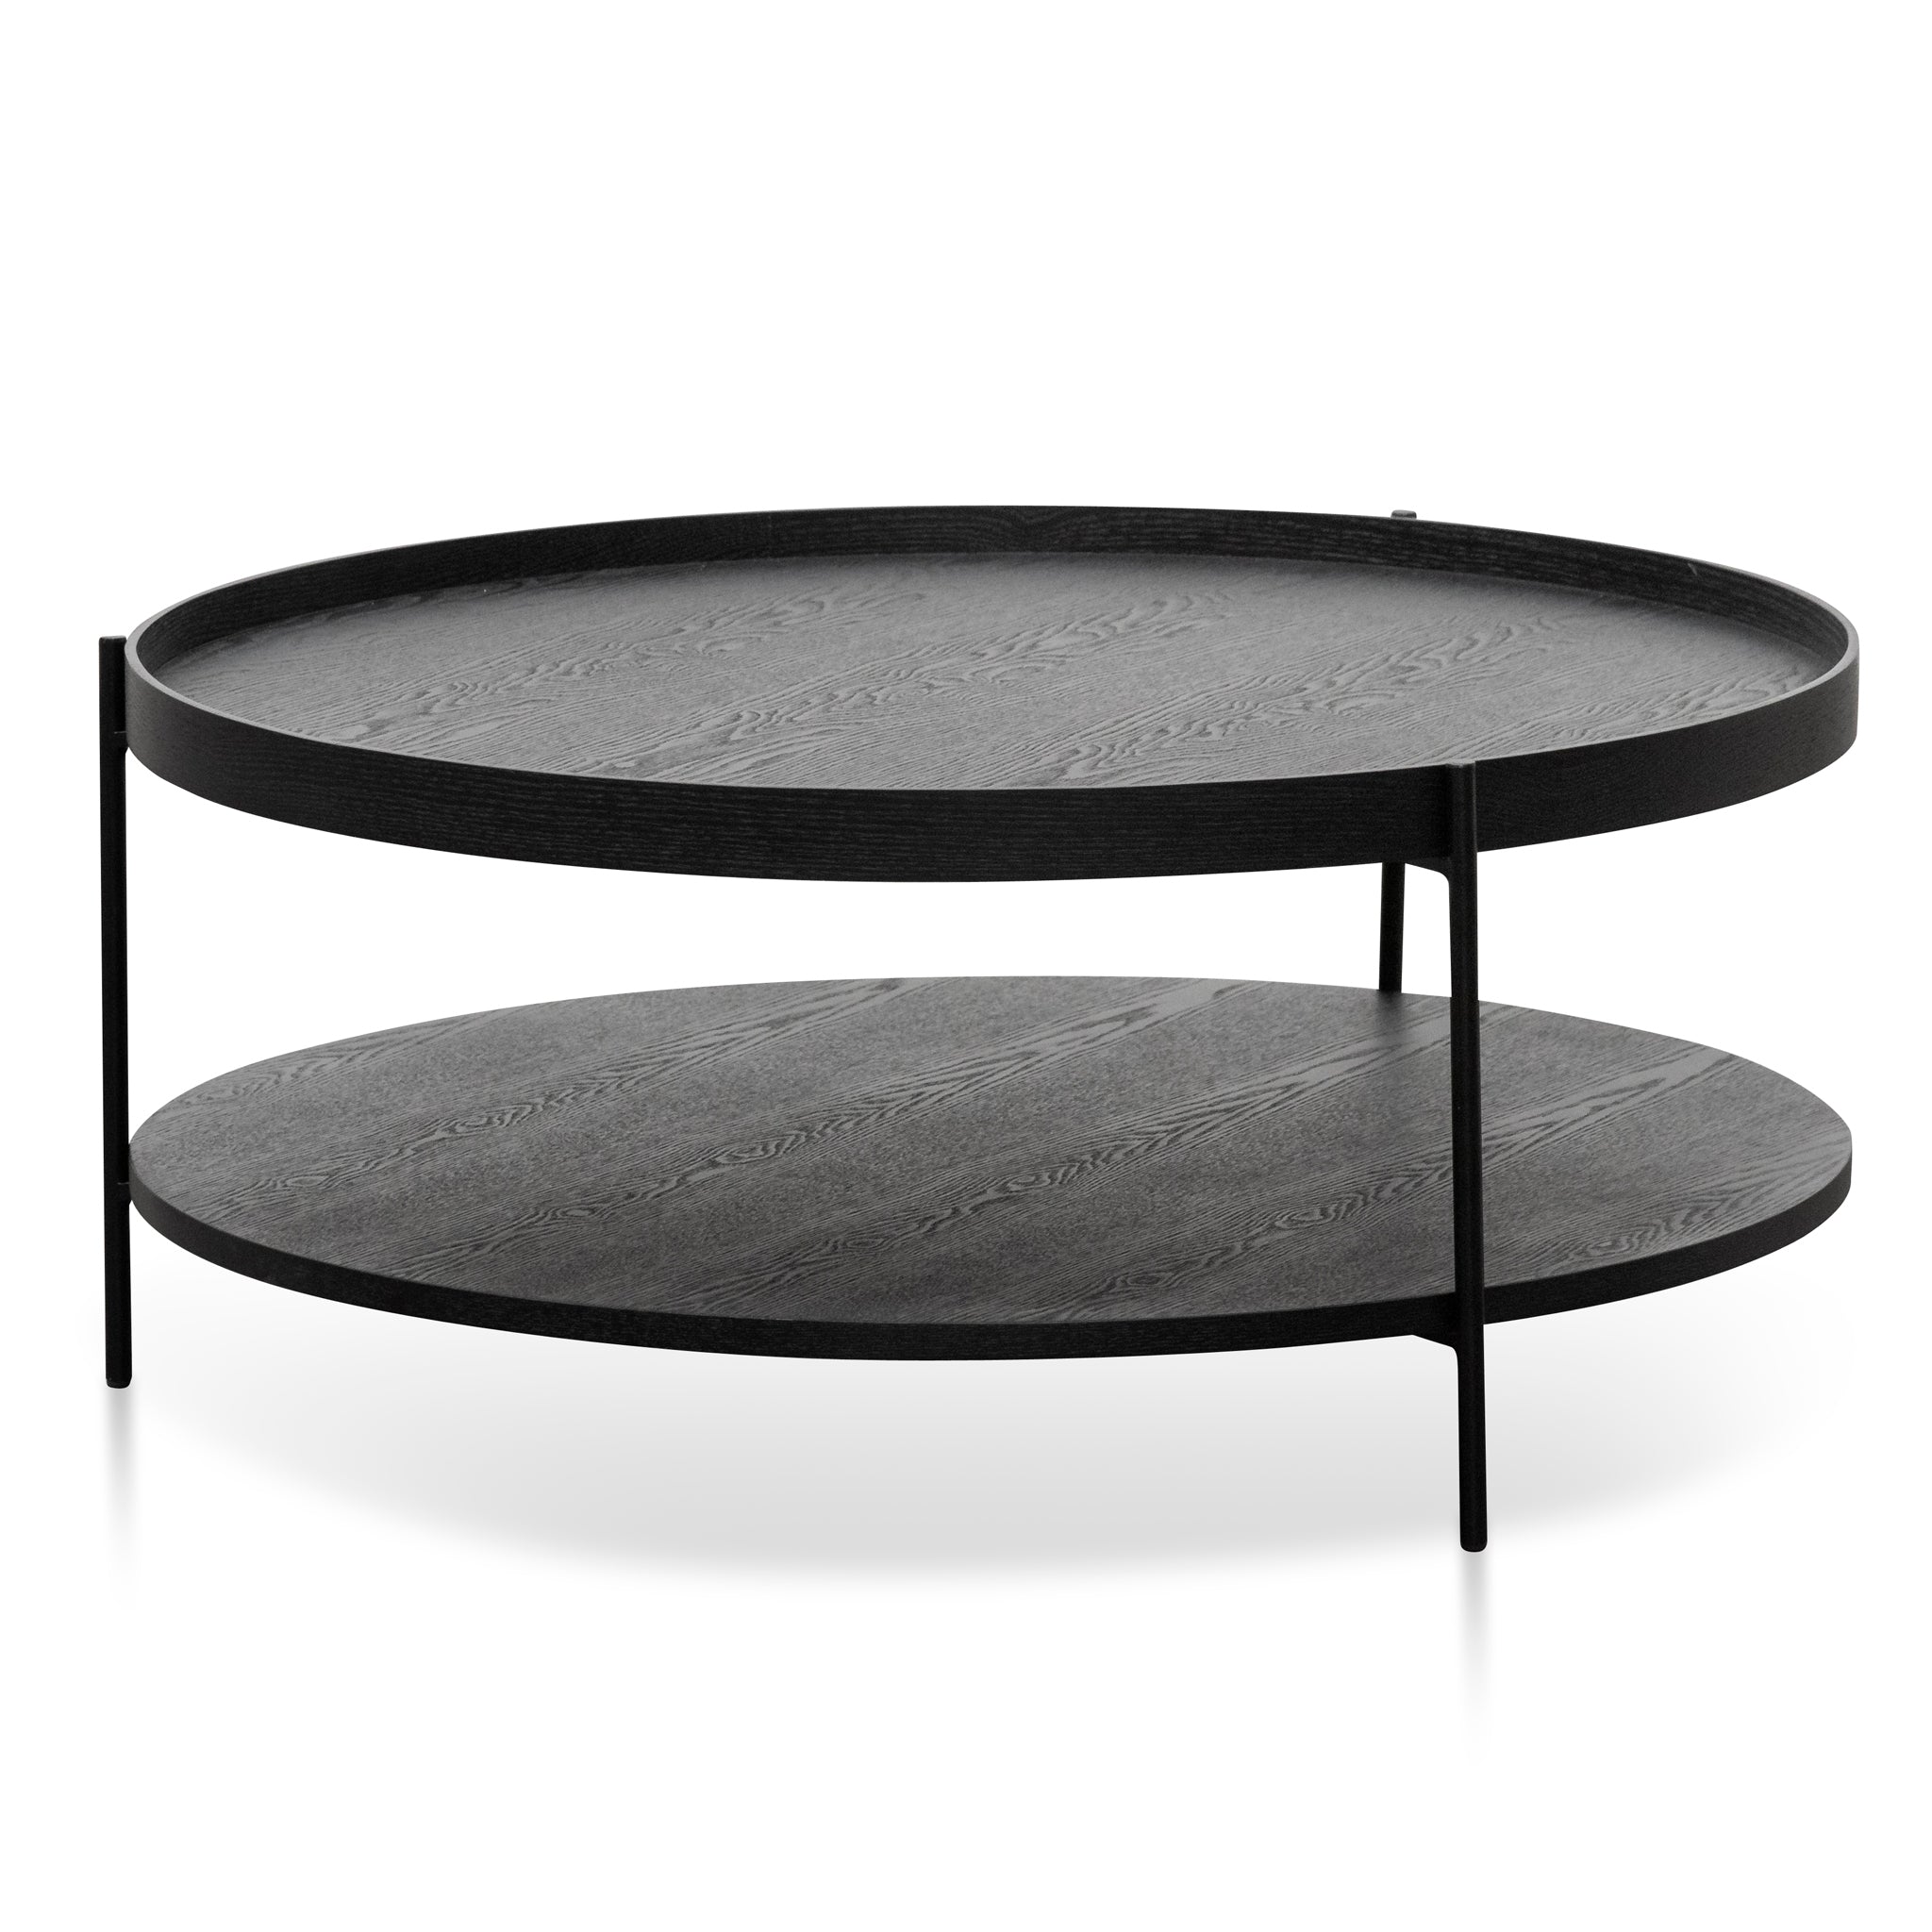 90cm Round Coffee Table - Full Black